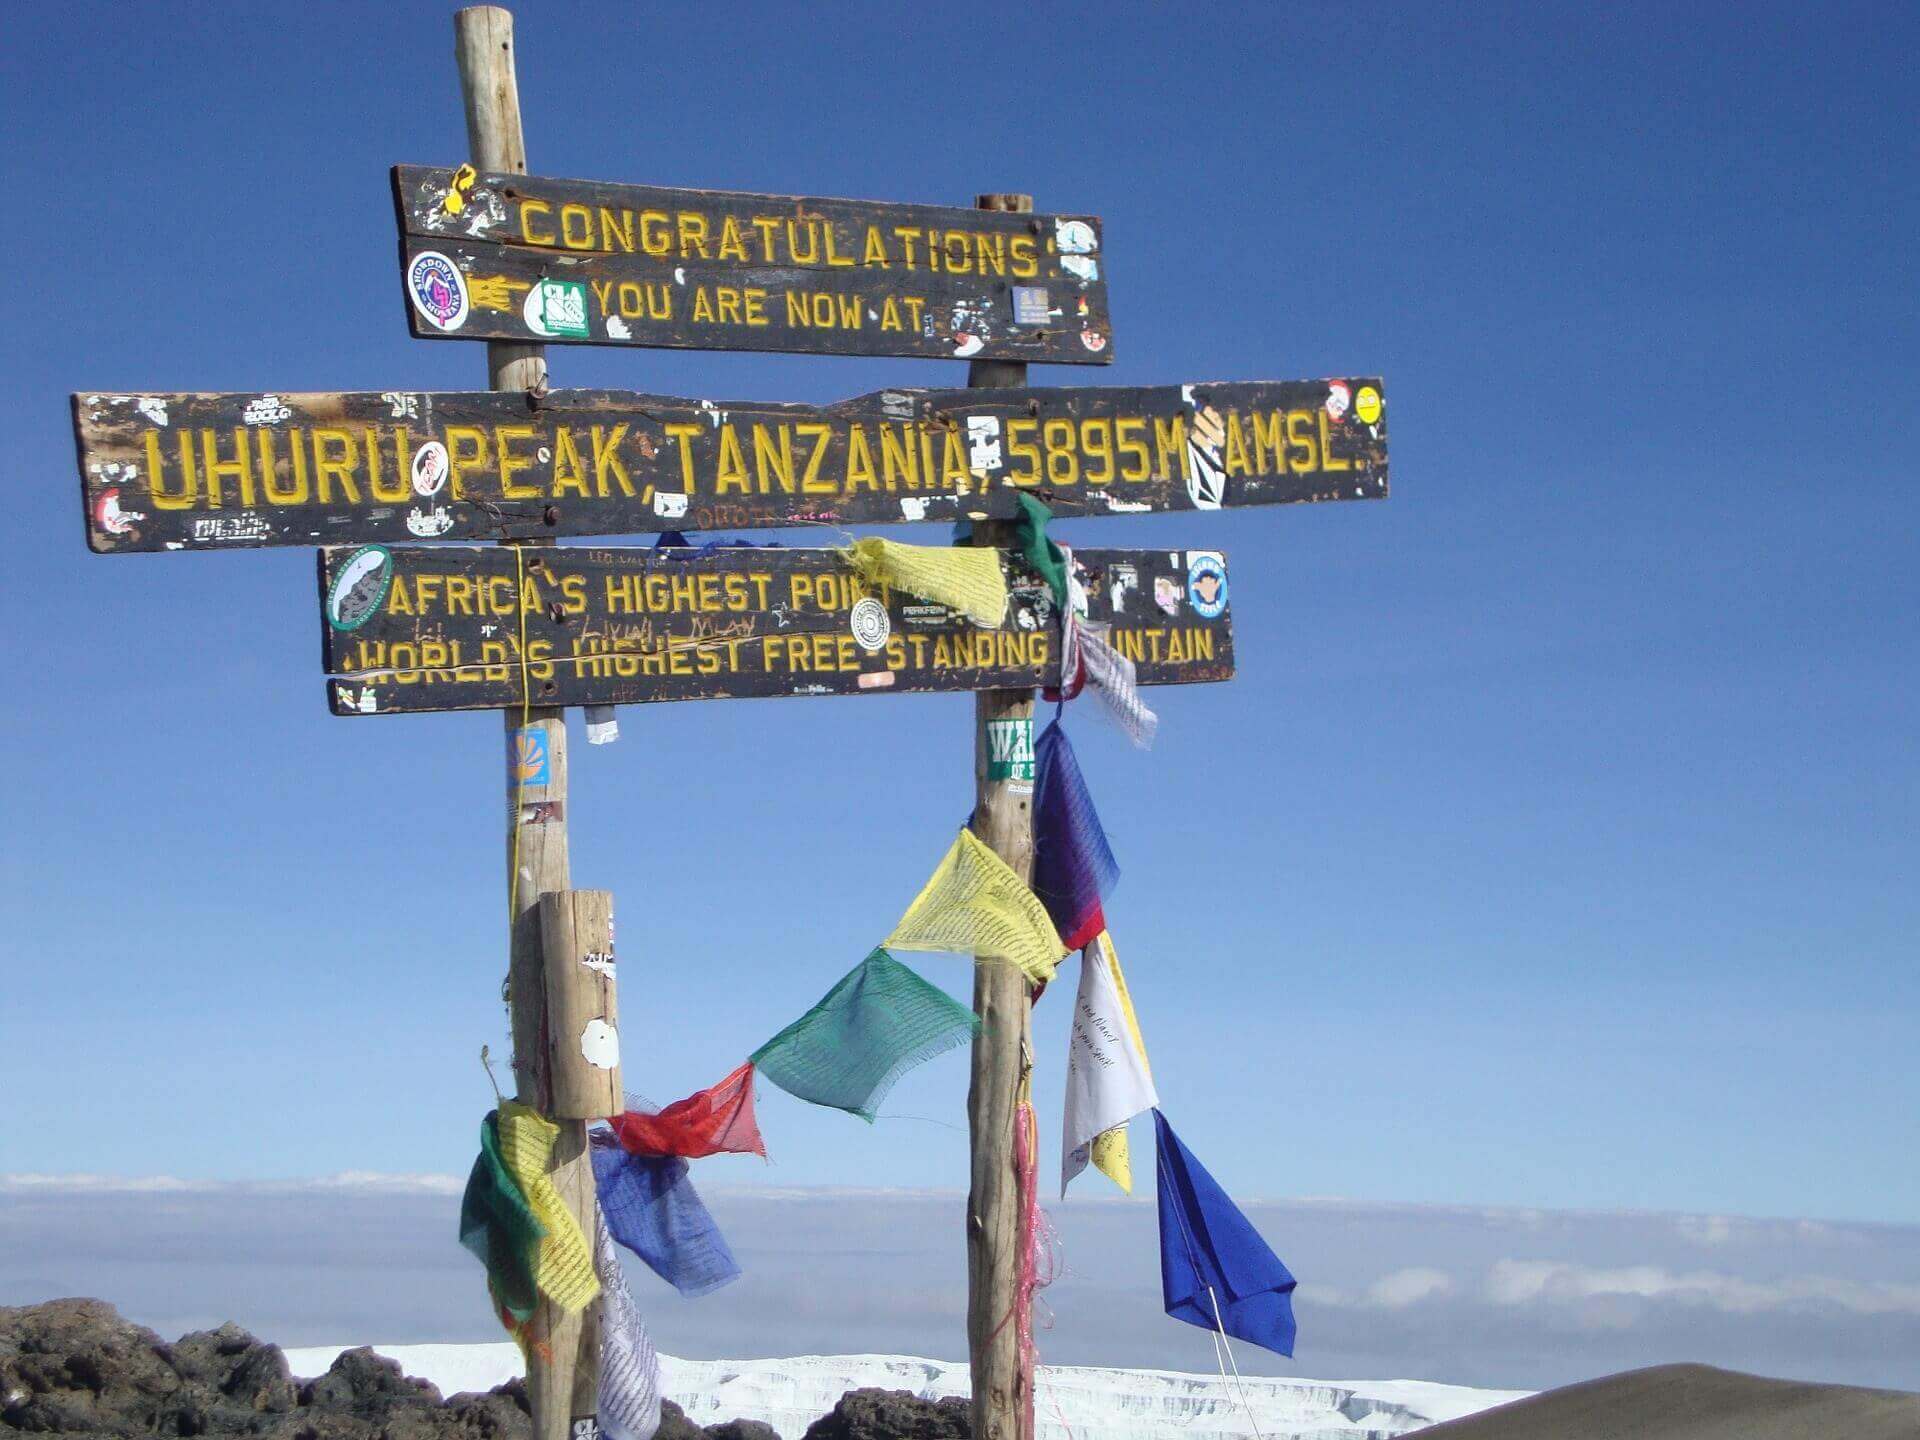 Uhuru Peak sign on the summit of Mount Kilimanjaro in Tanzania